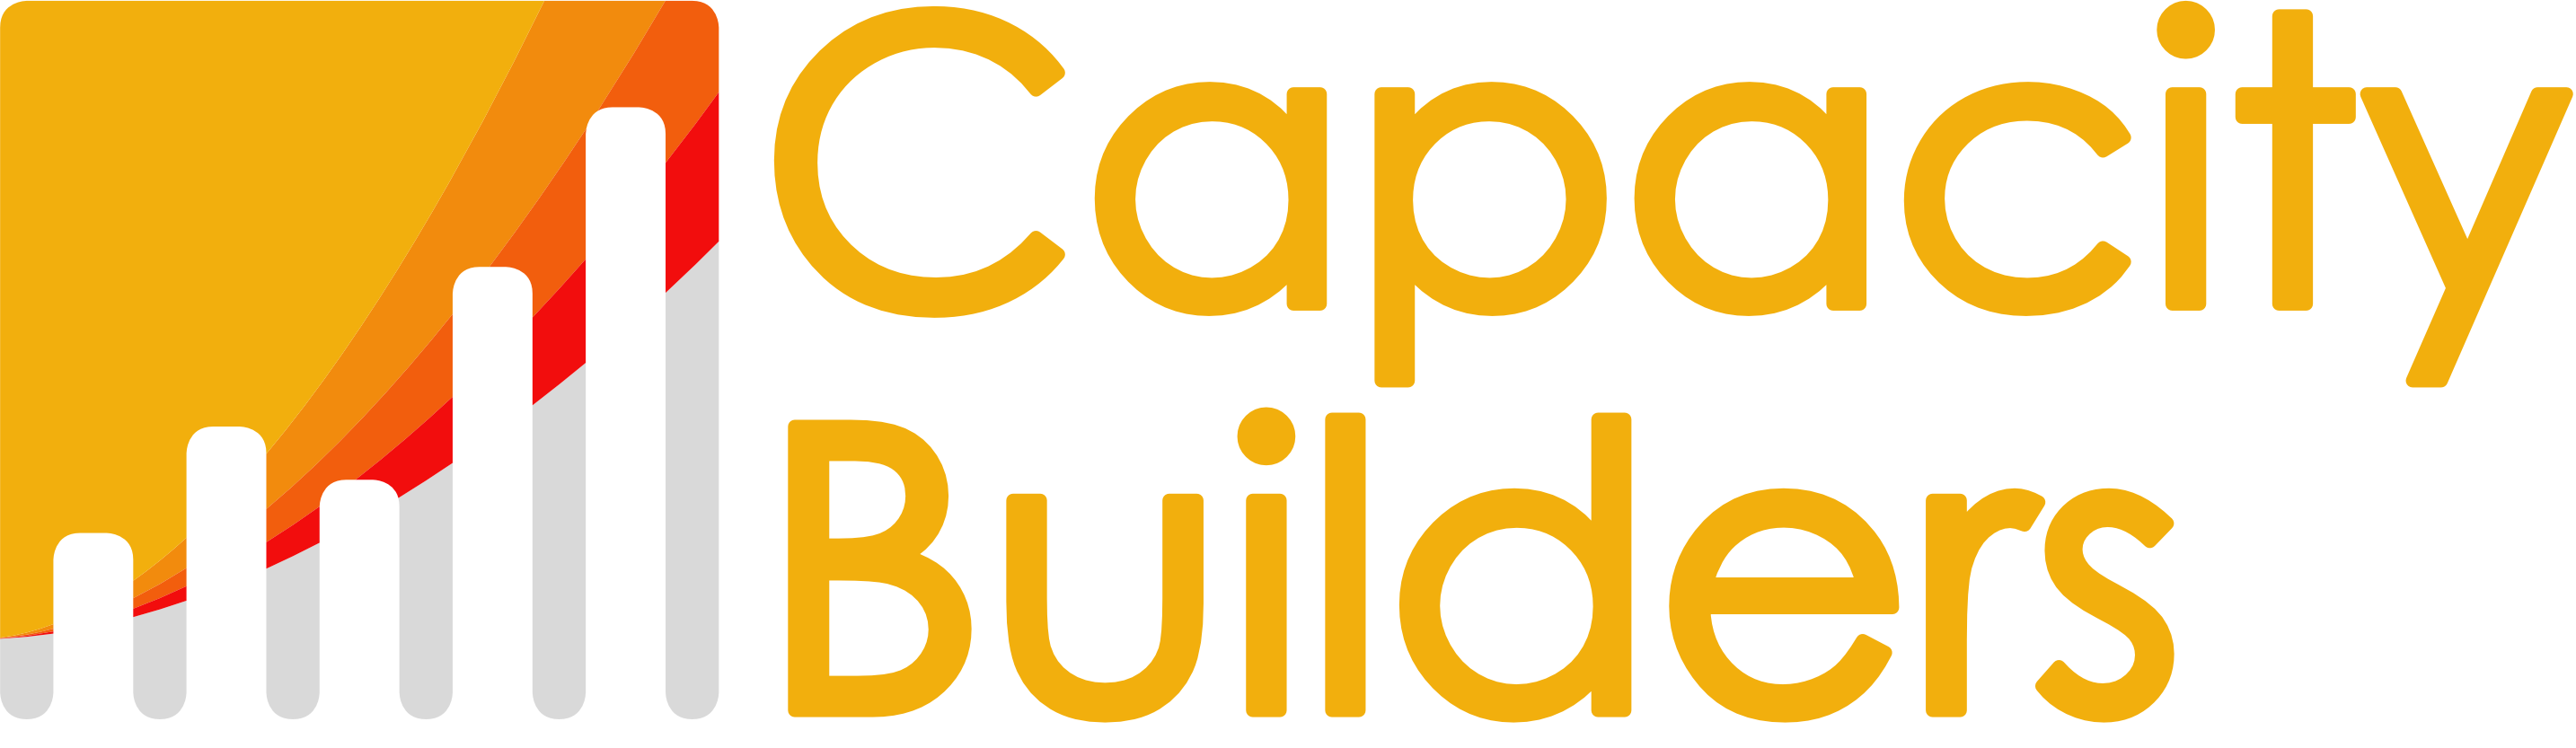 Capacity Builders, Inc.